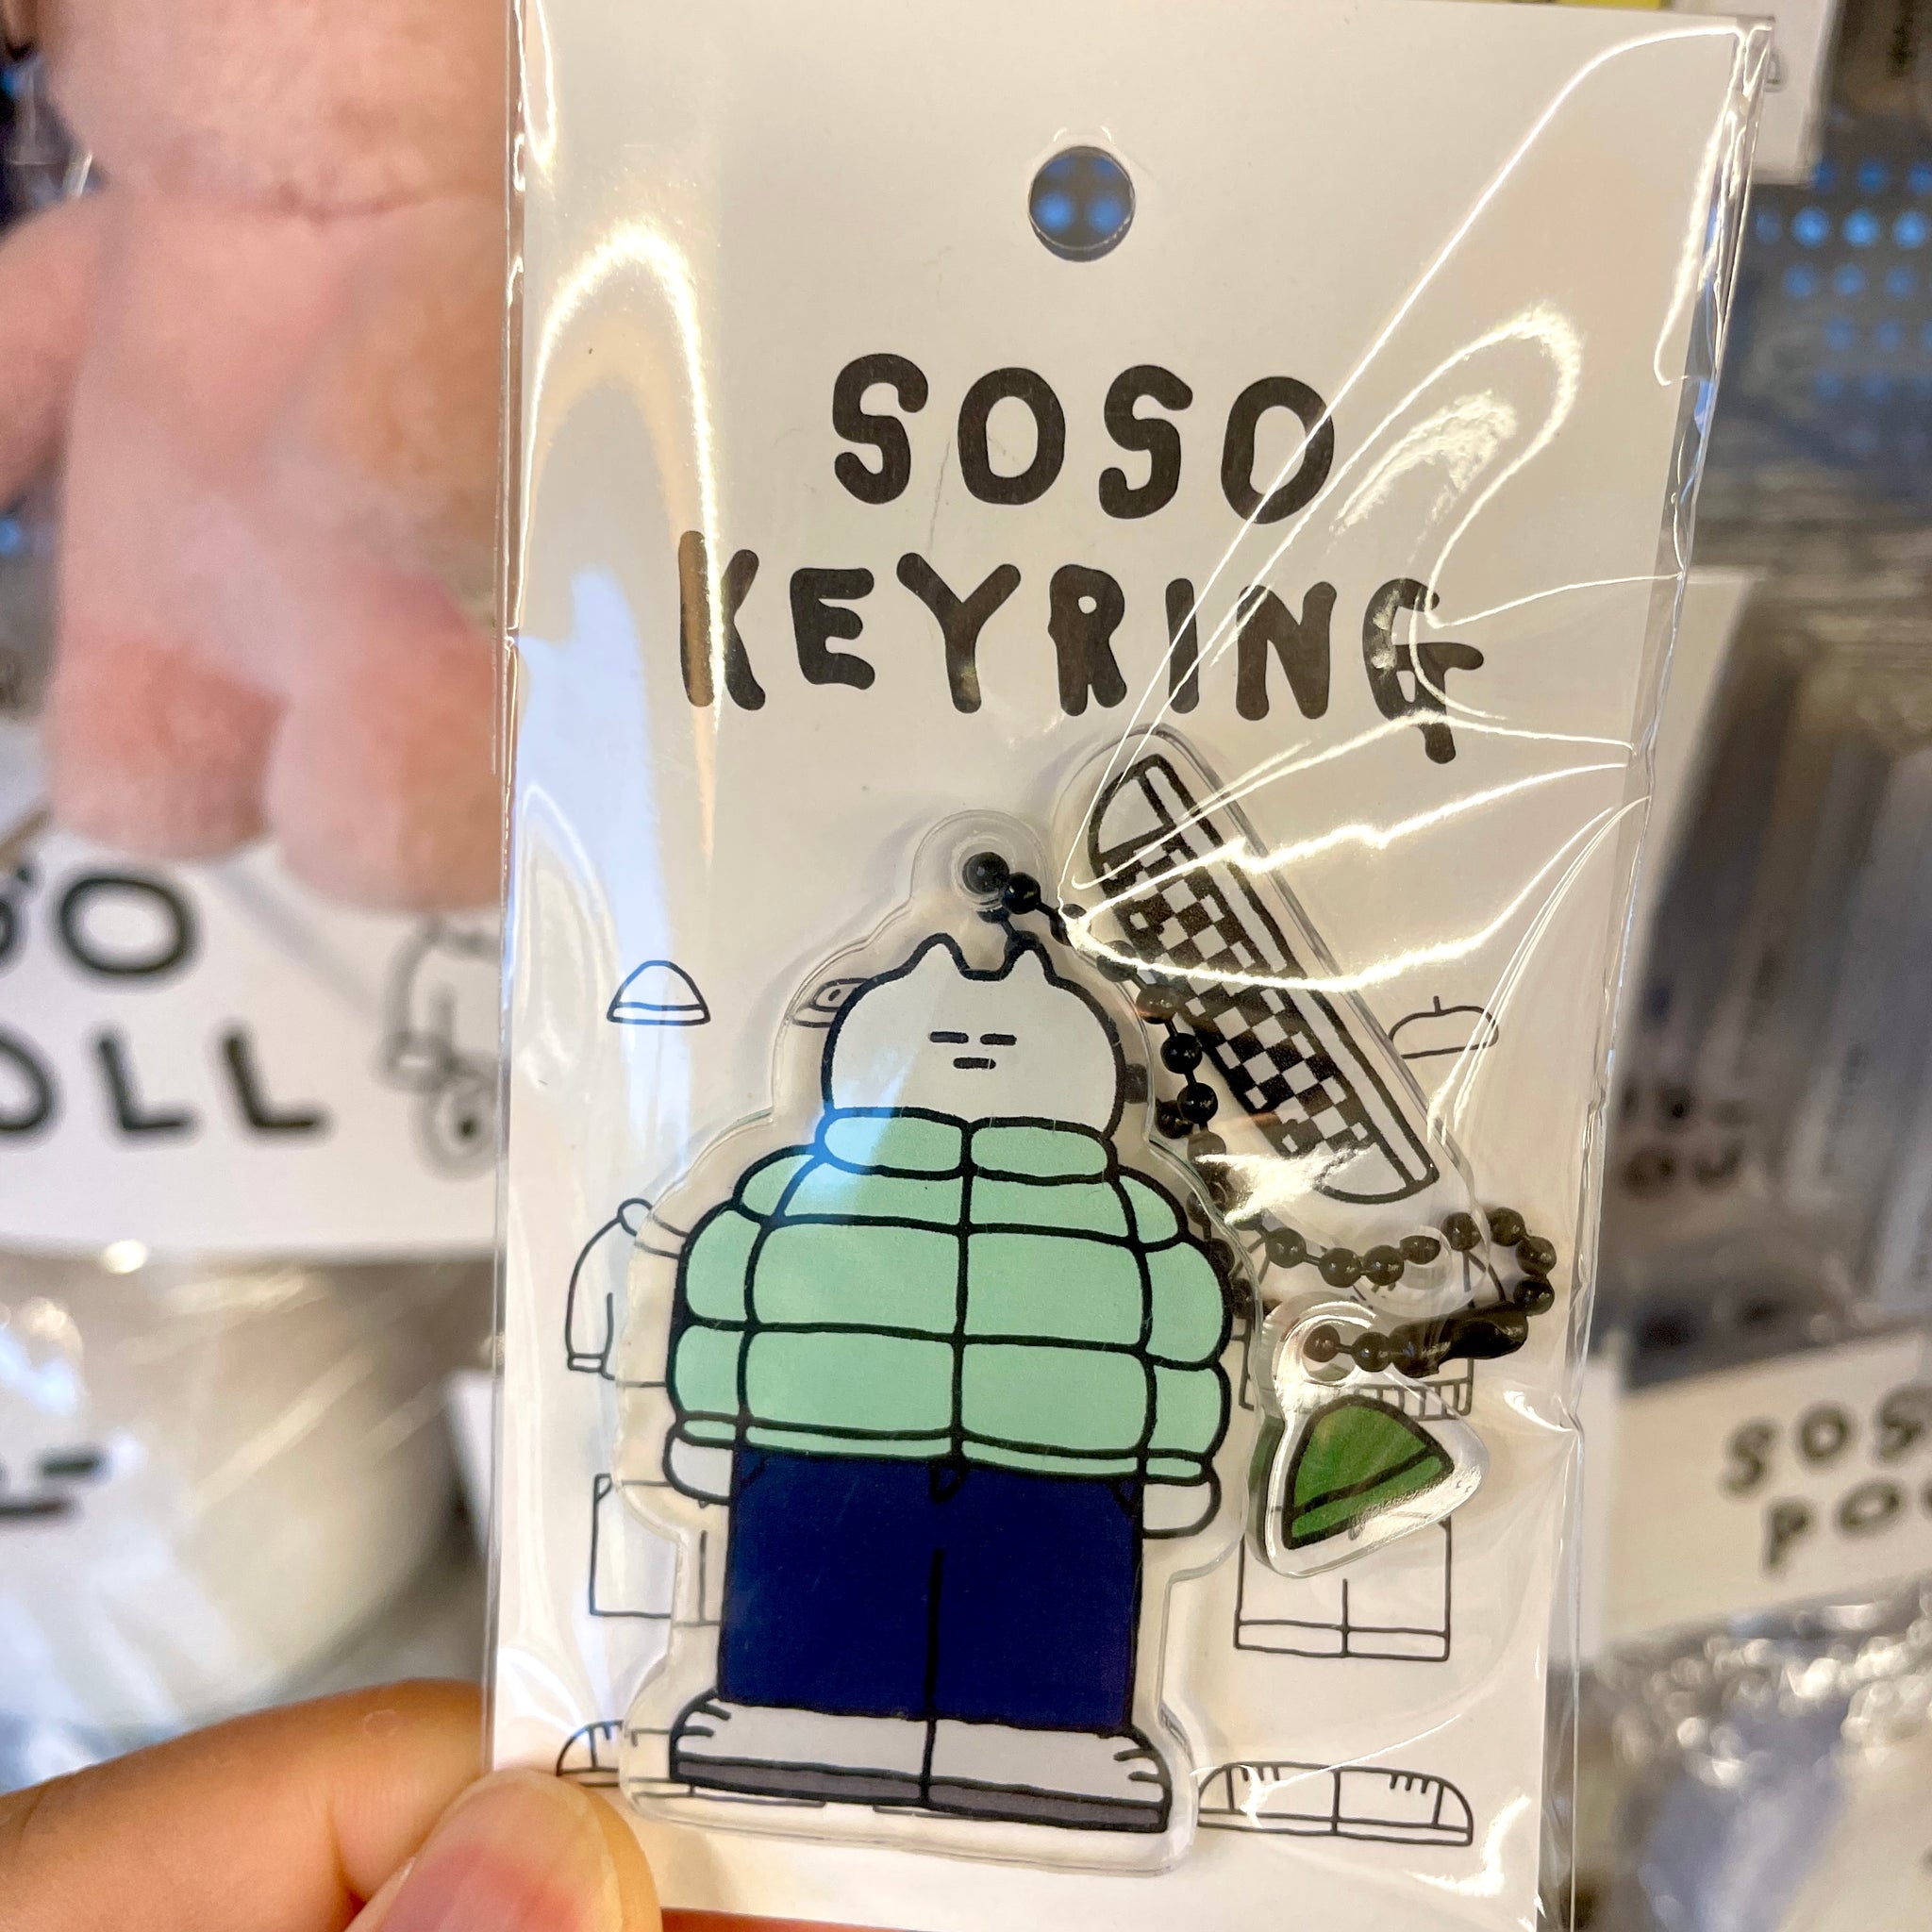 【韓國連線】SOSO Acrylic Keyring